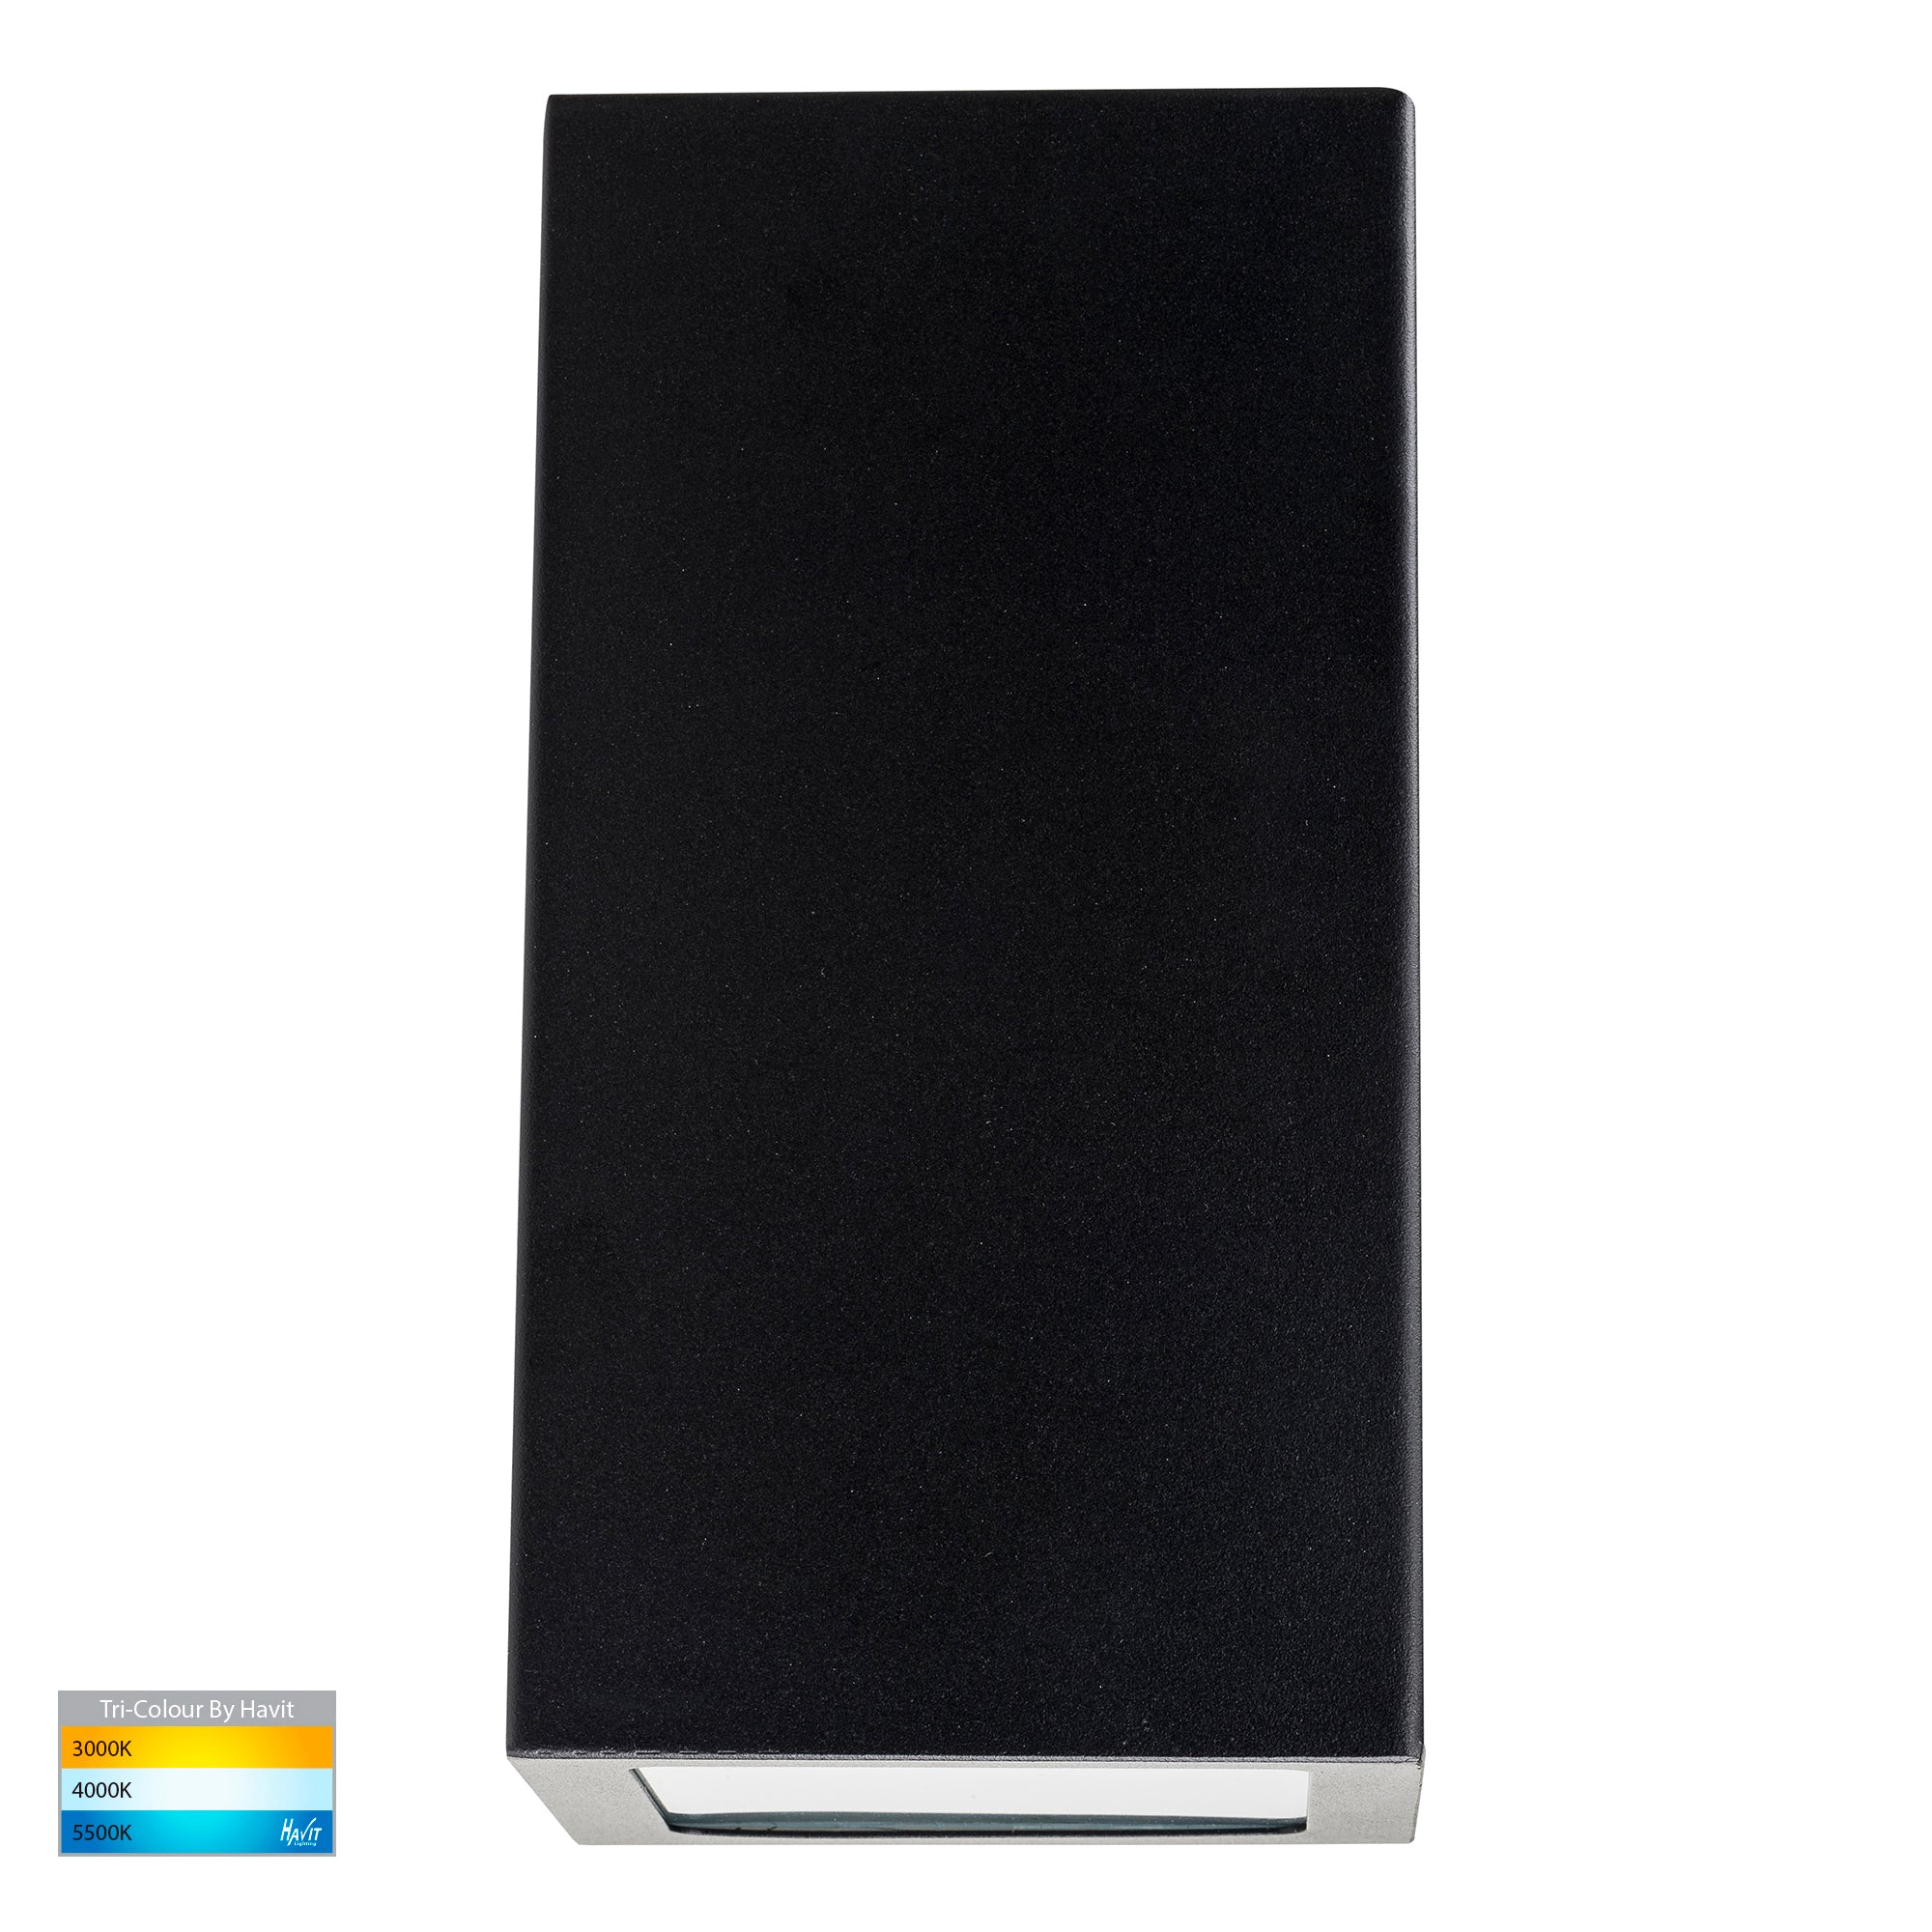 HV3601T-BLK - Taper Black TRI Colour LED Wedge Wall Light